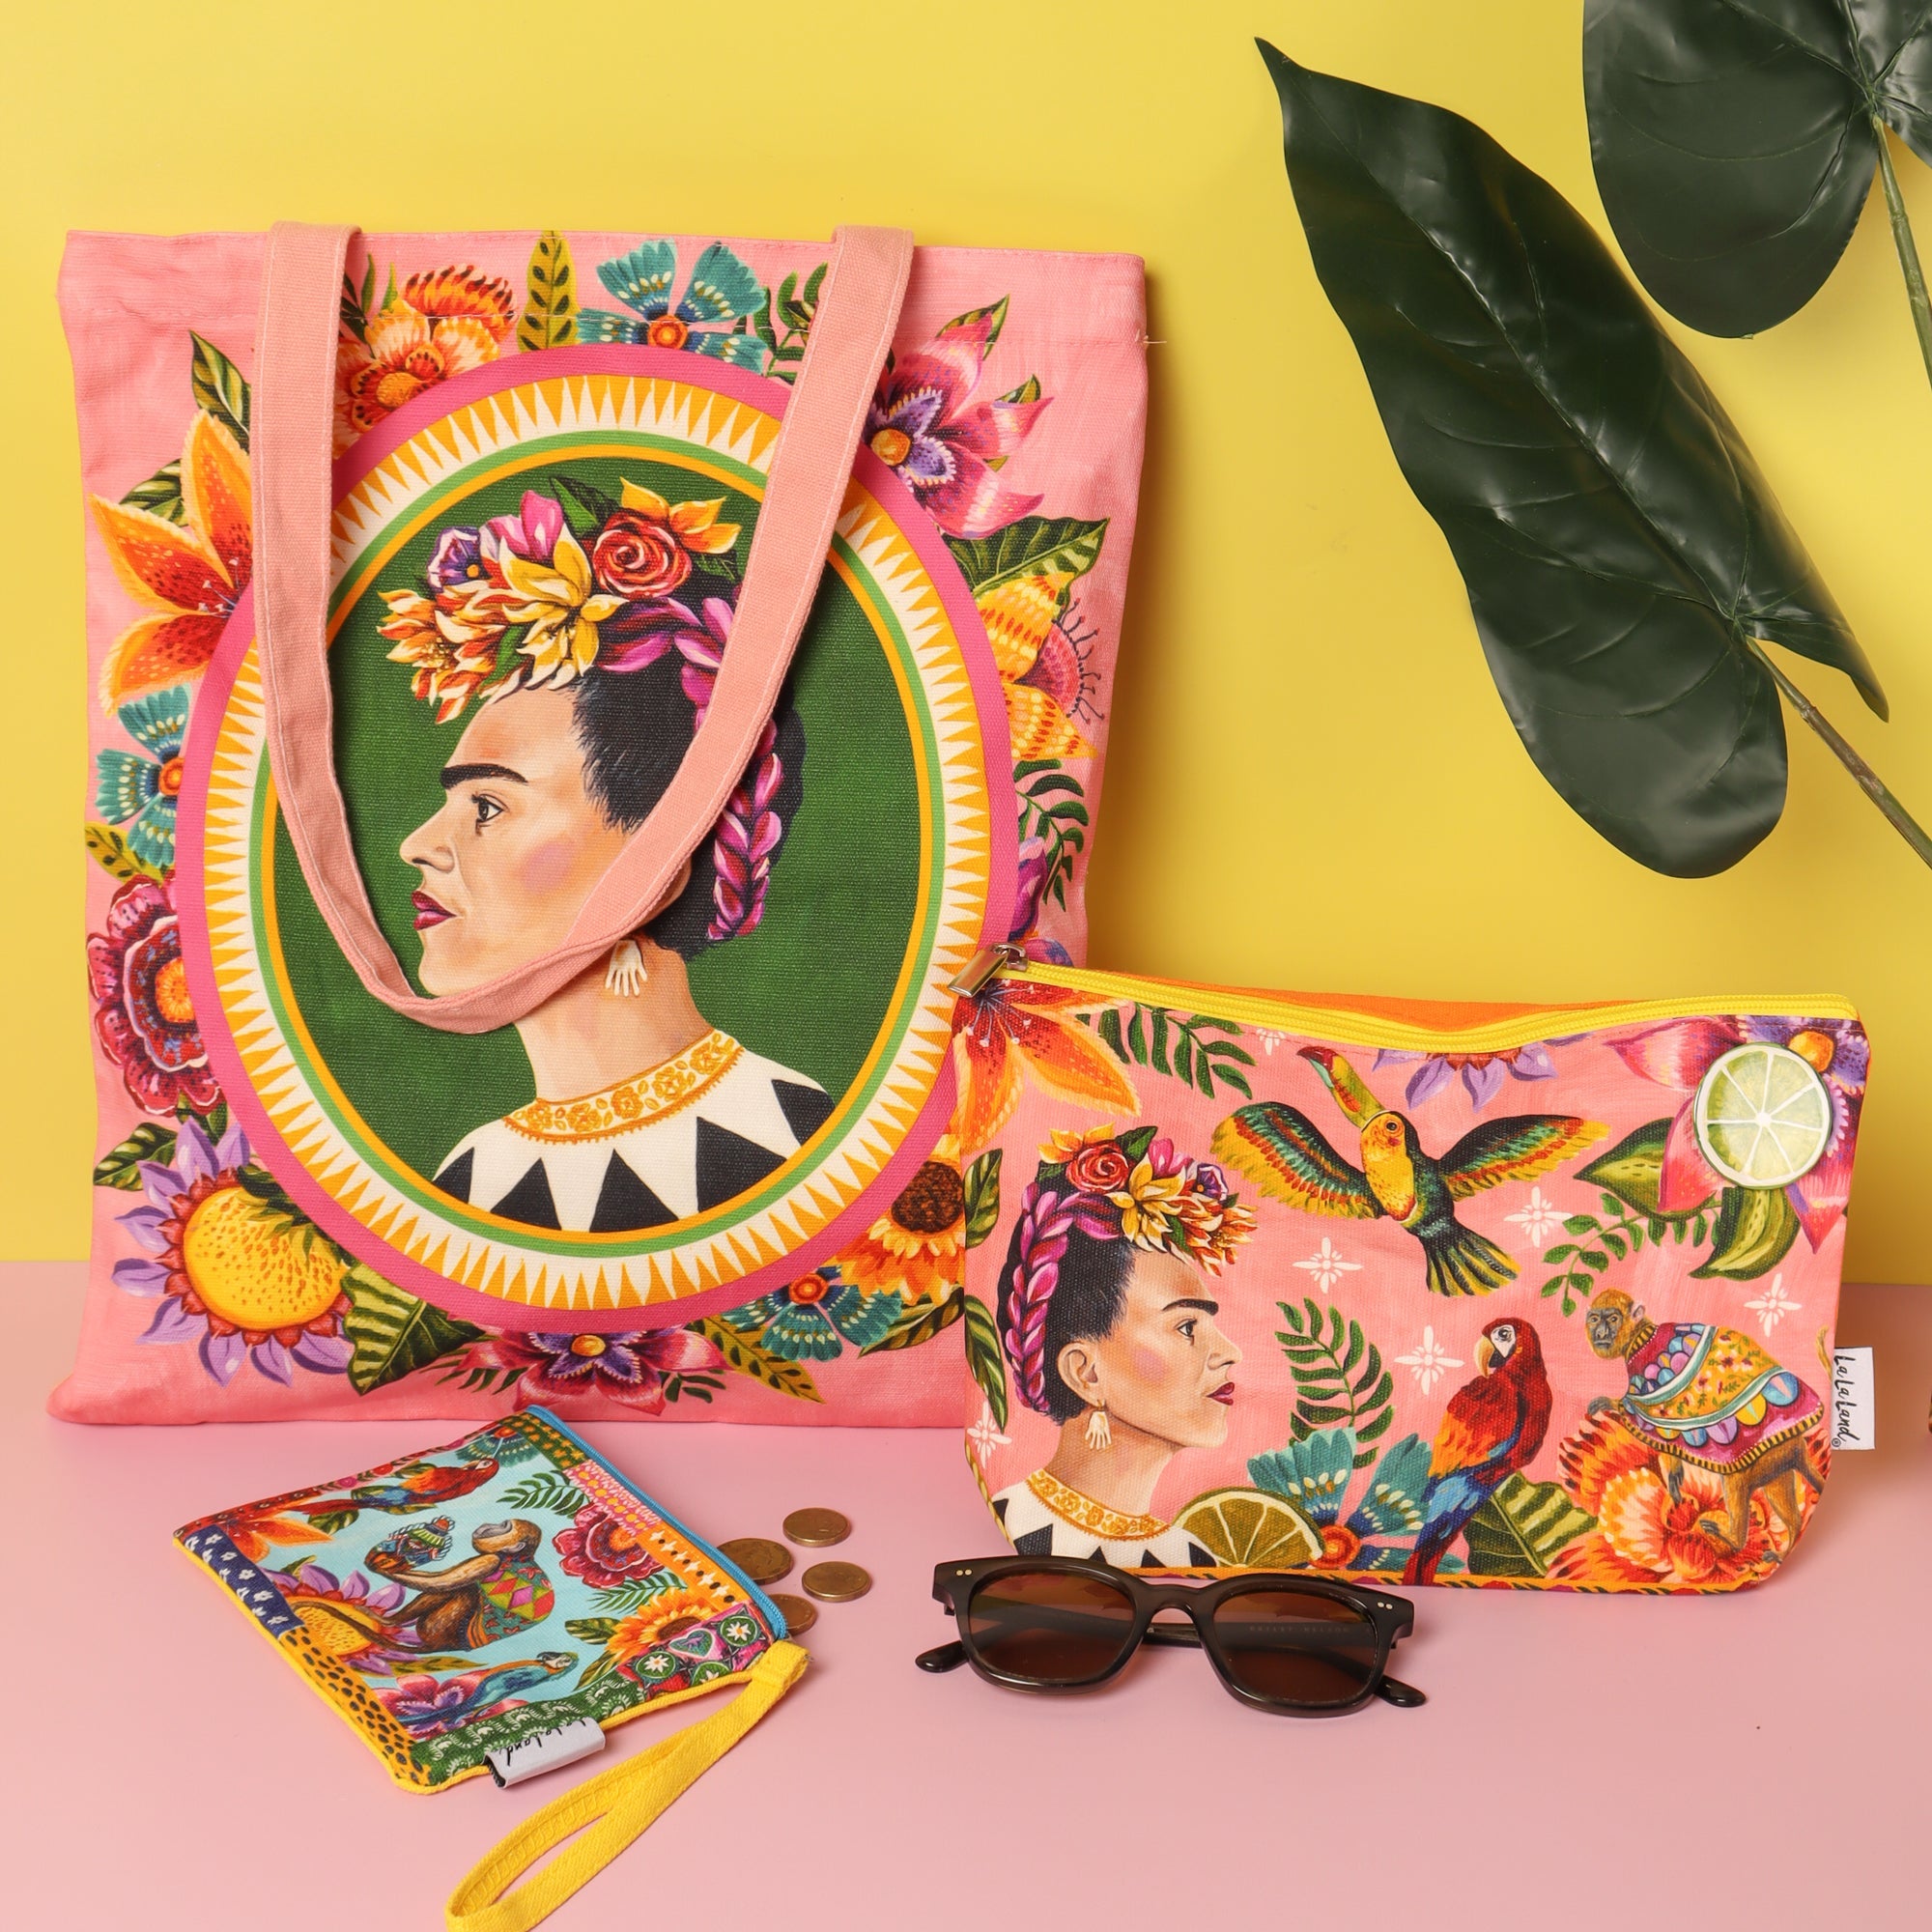 Frida Kahlo Tote bag and cosmetic bag by La La Land